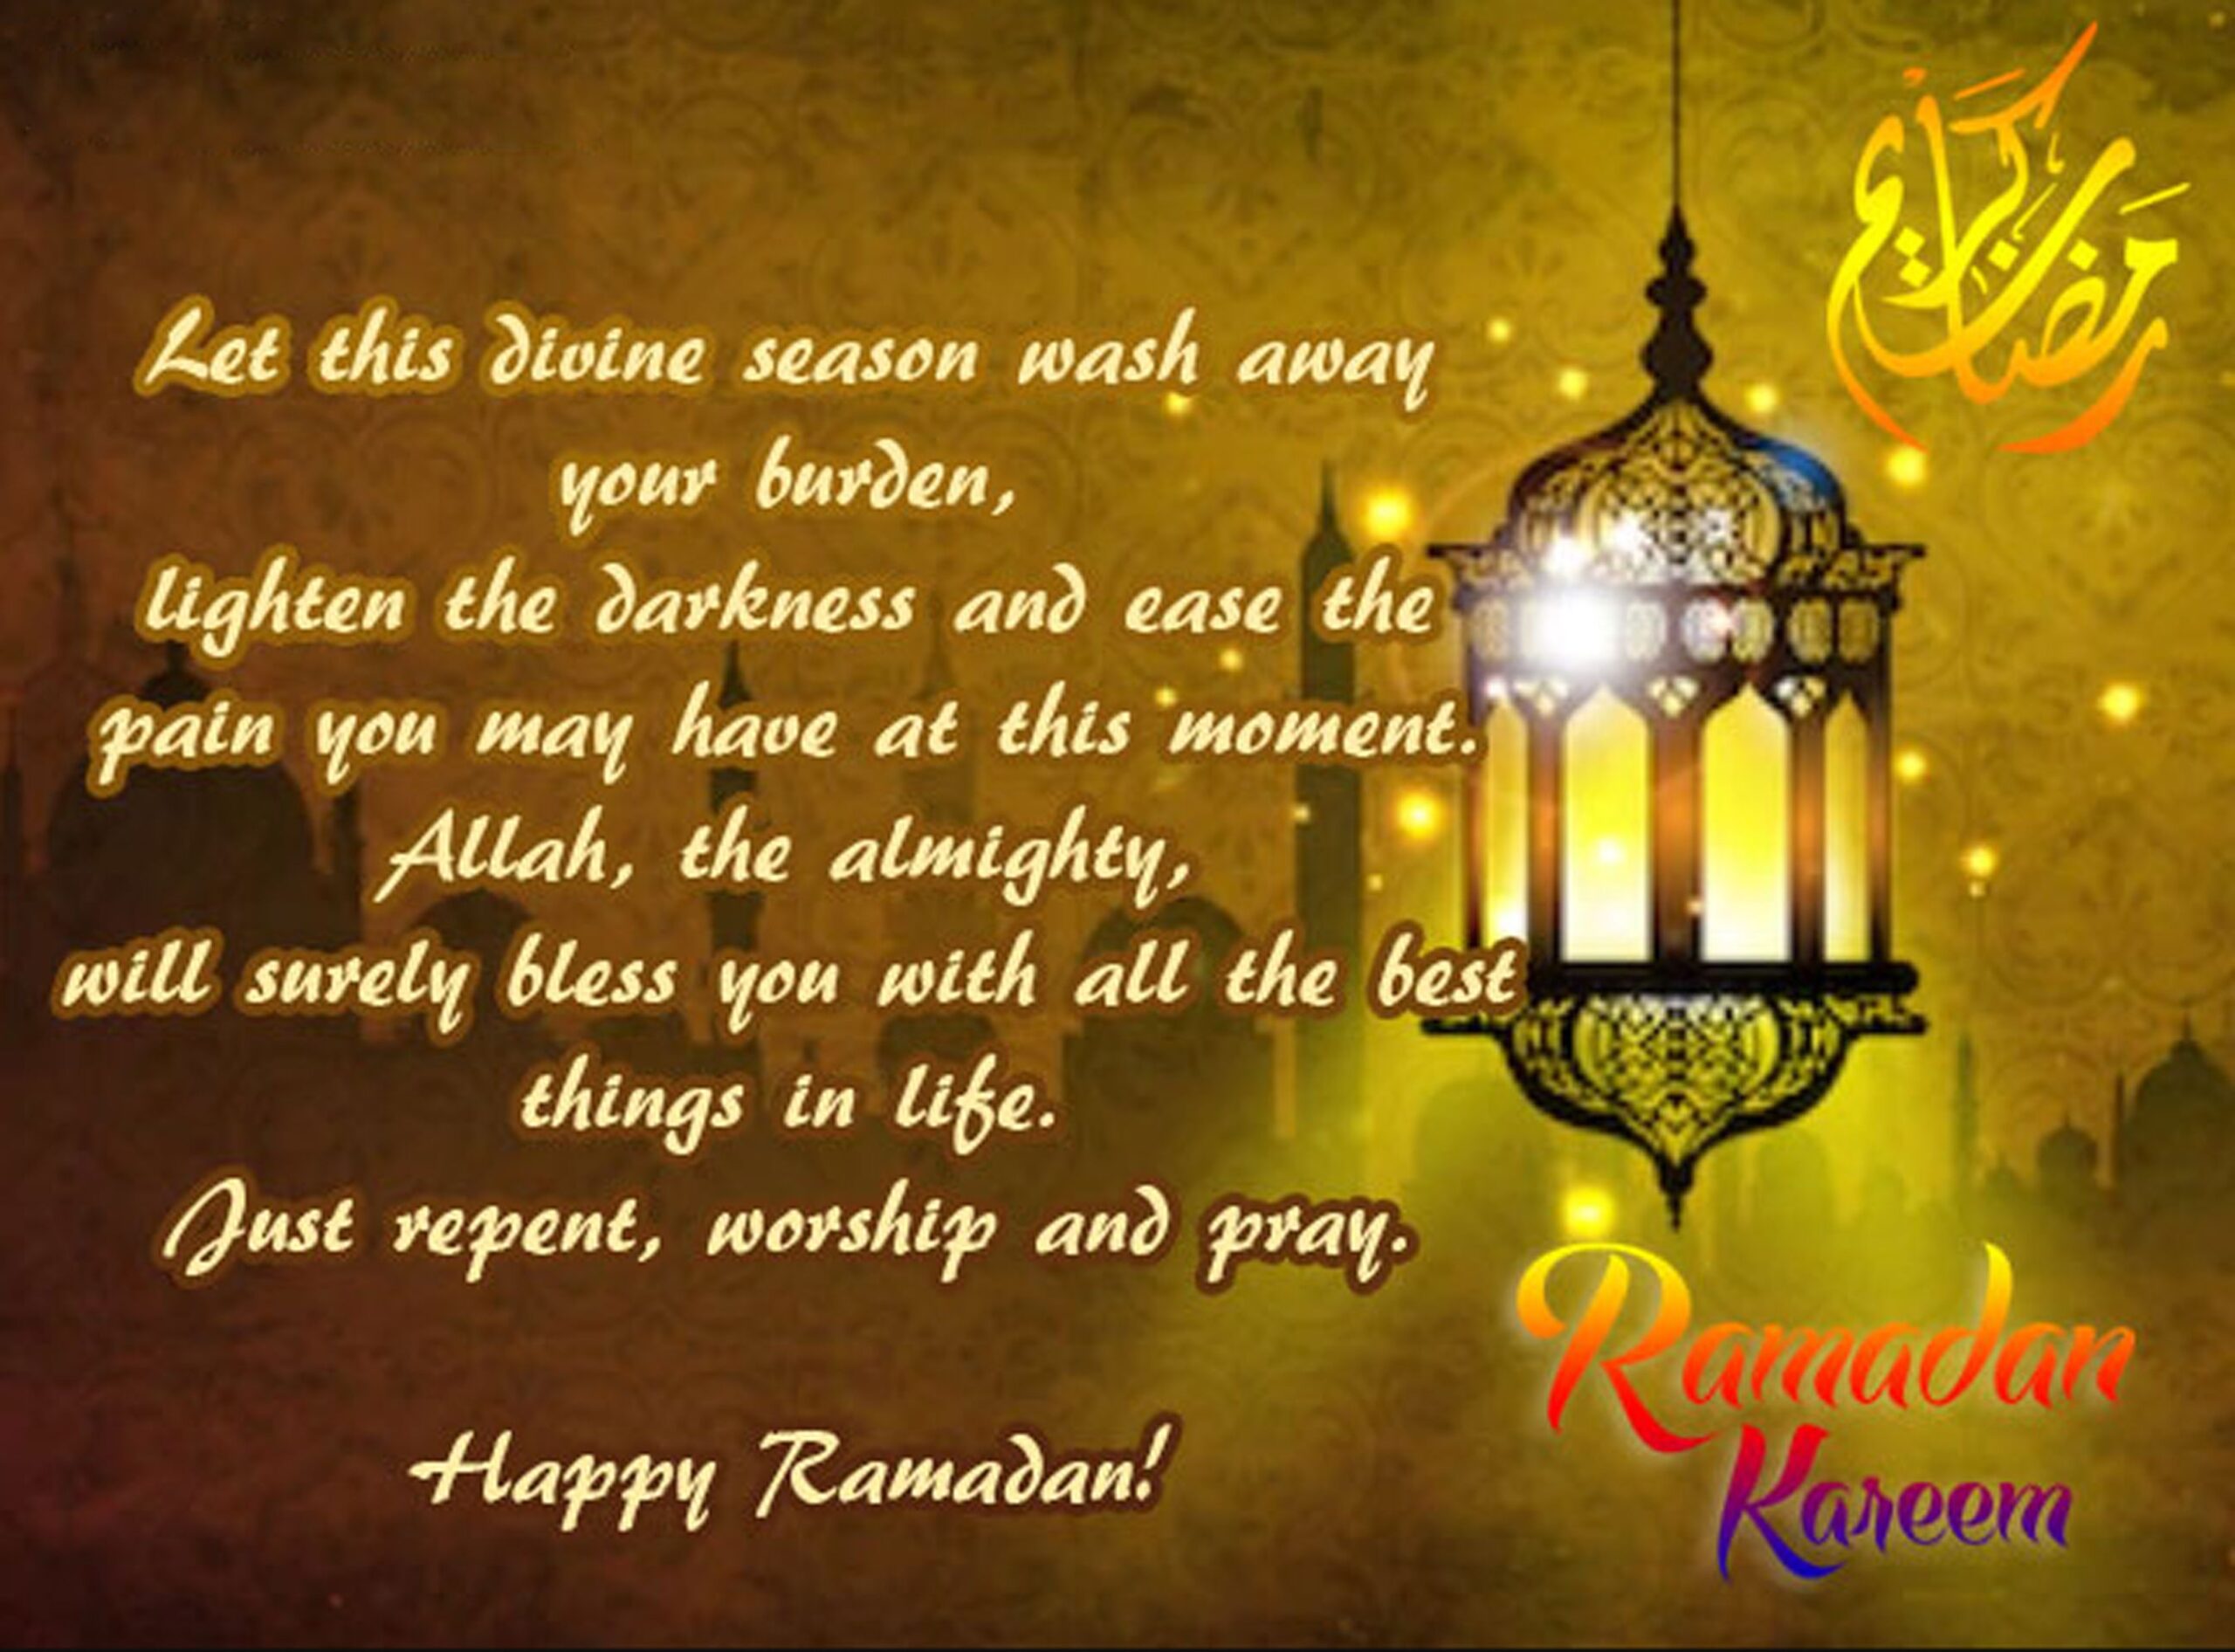 Ramzan greetings messages